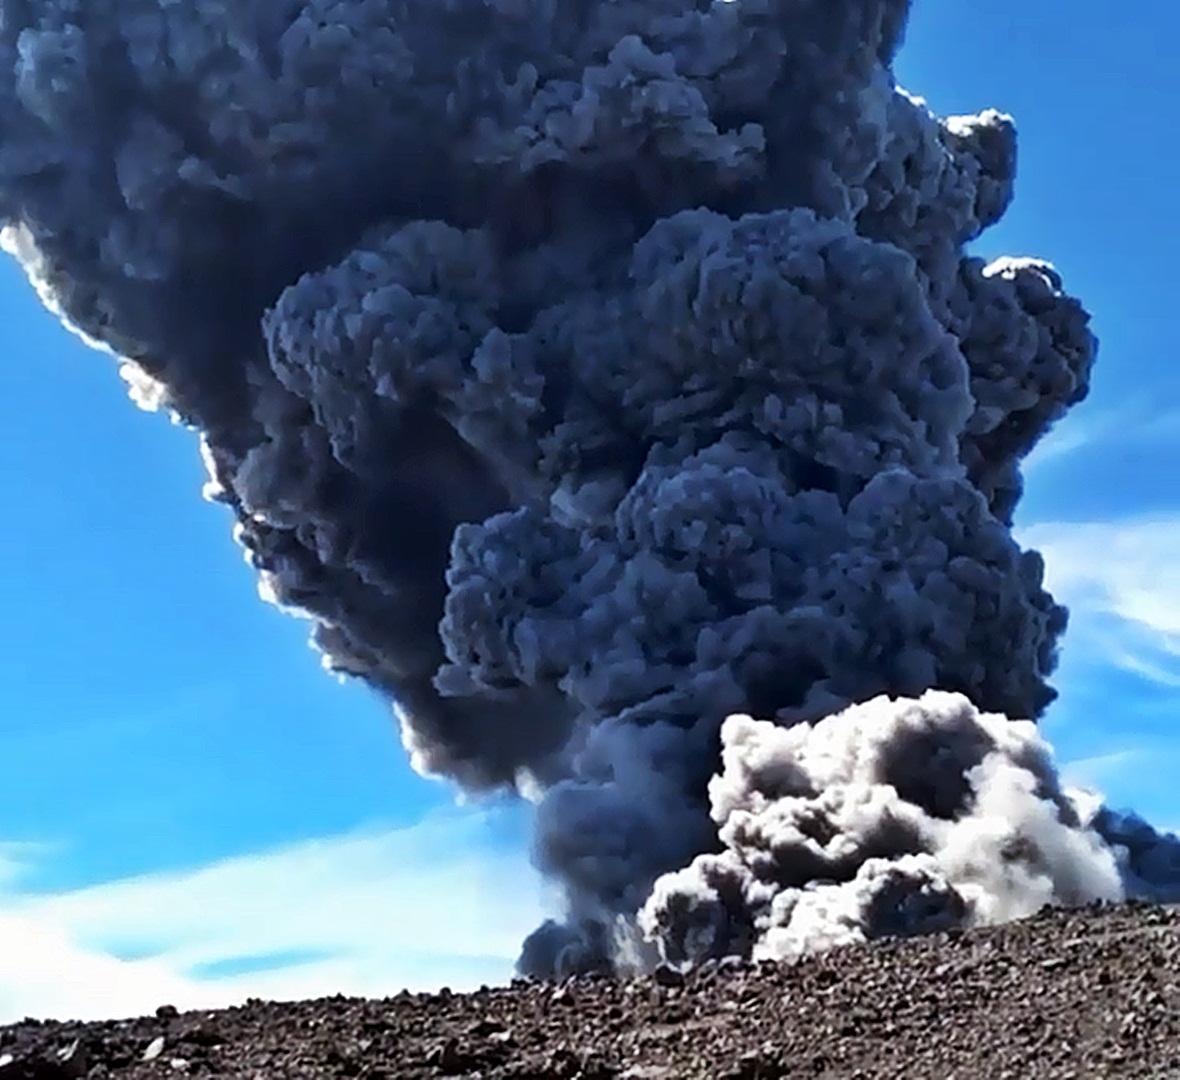 Gunung Marapi erupsi dan statusnya Waspada (level II) sejak 3/8/2011 hingga sekarang. @indahpeermatasariii